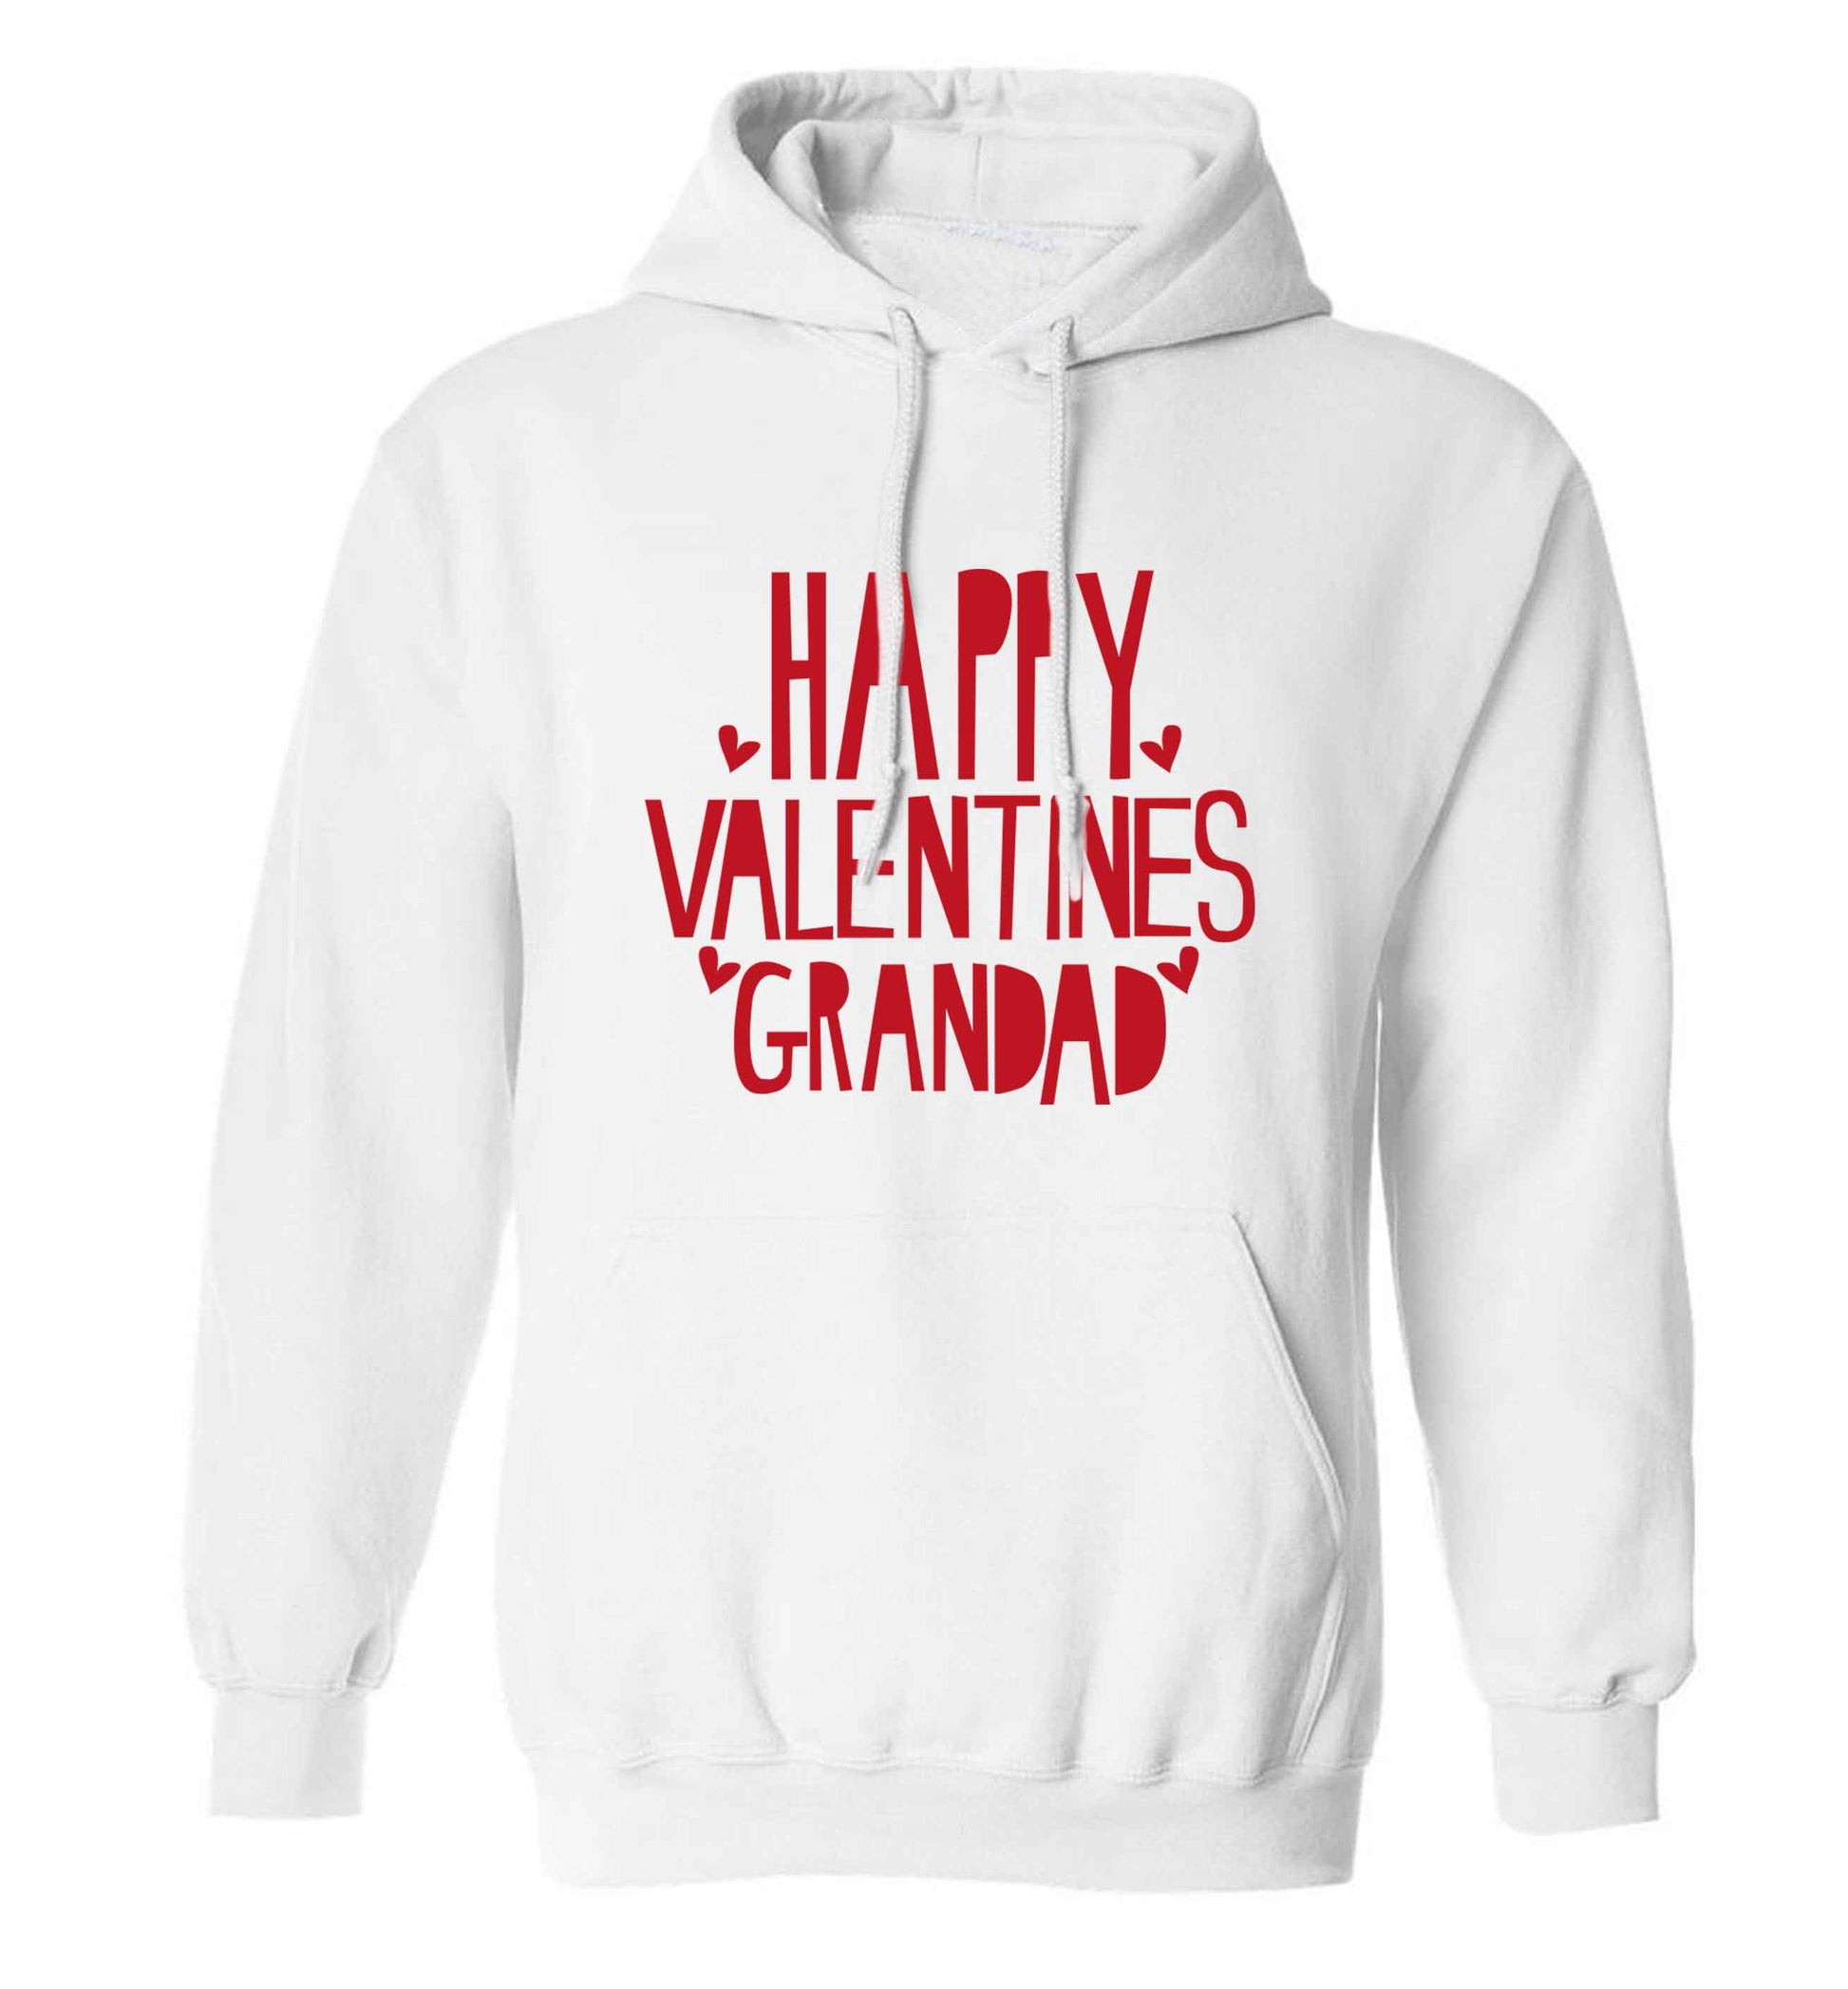 Happy valentines grandad adults unisex white hoodie 2XL